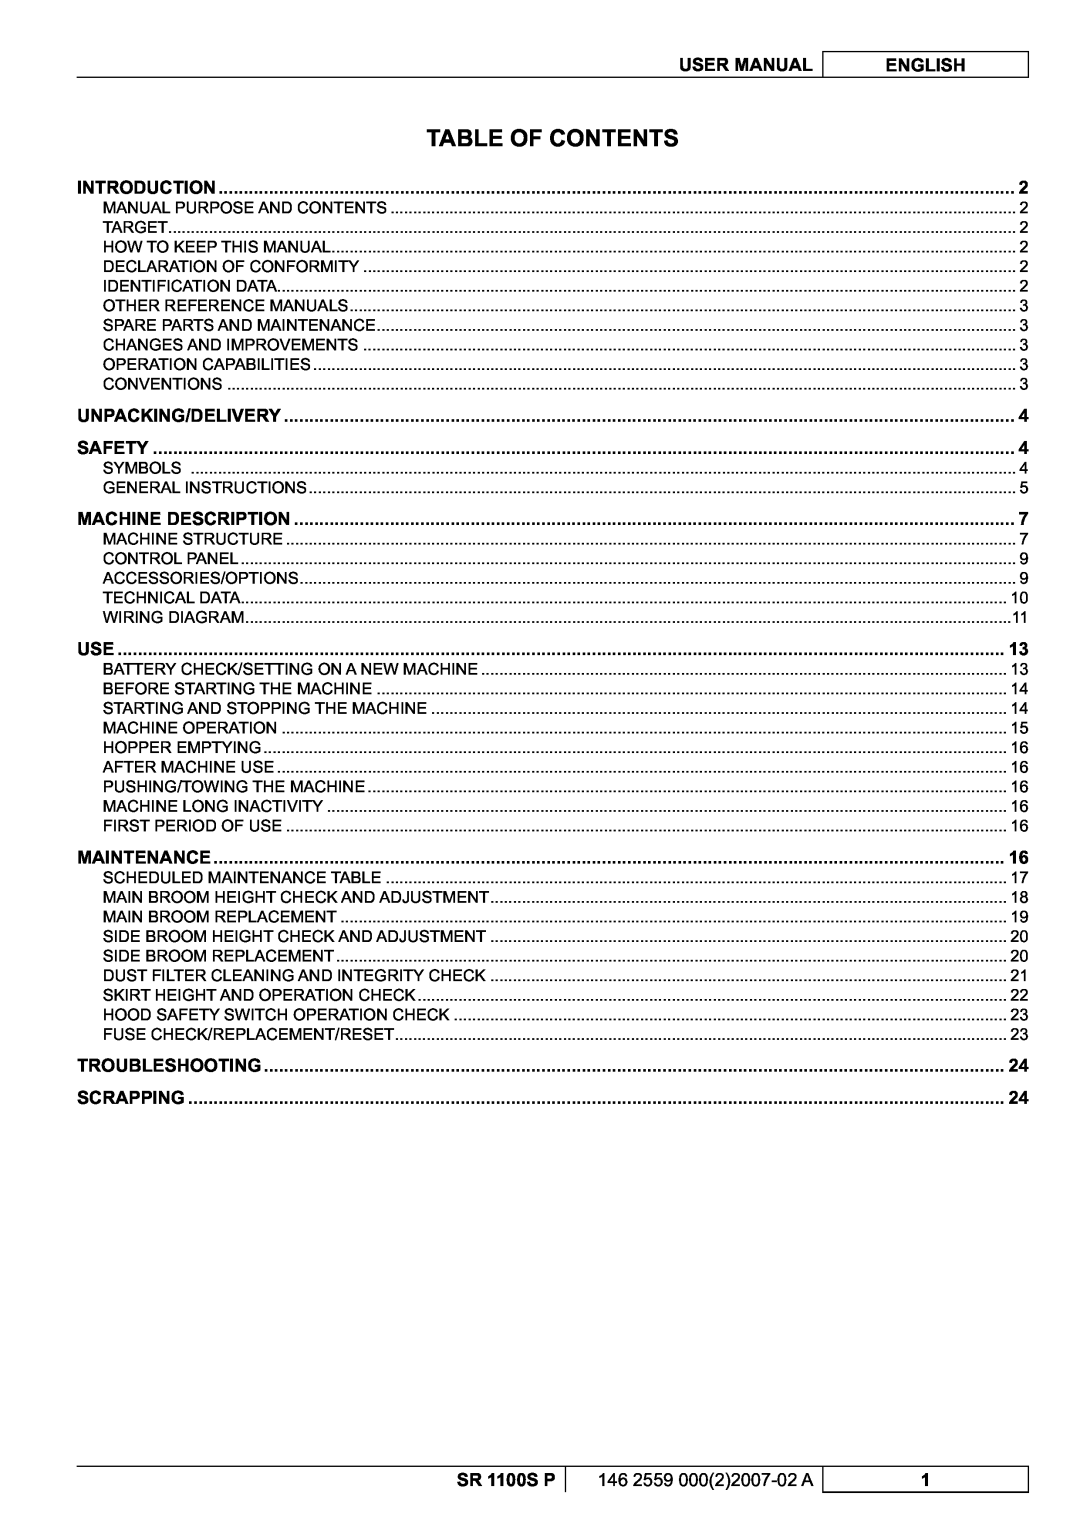 Nilfisk-Advance America manuel dutilisation Table Of Contents, User Manual, English, SR 1100S P 